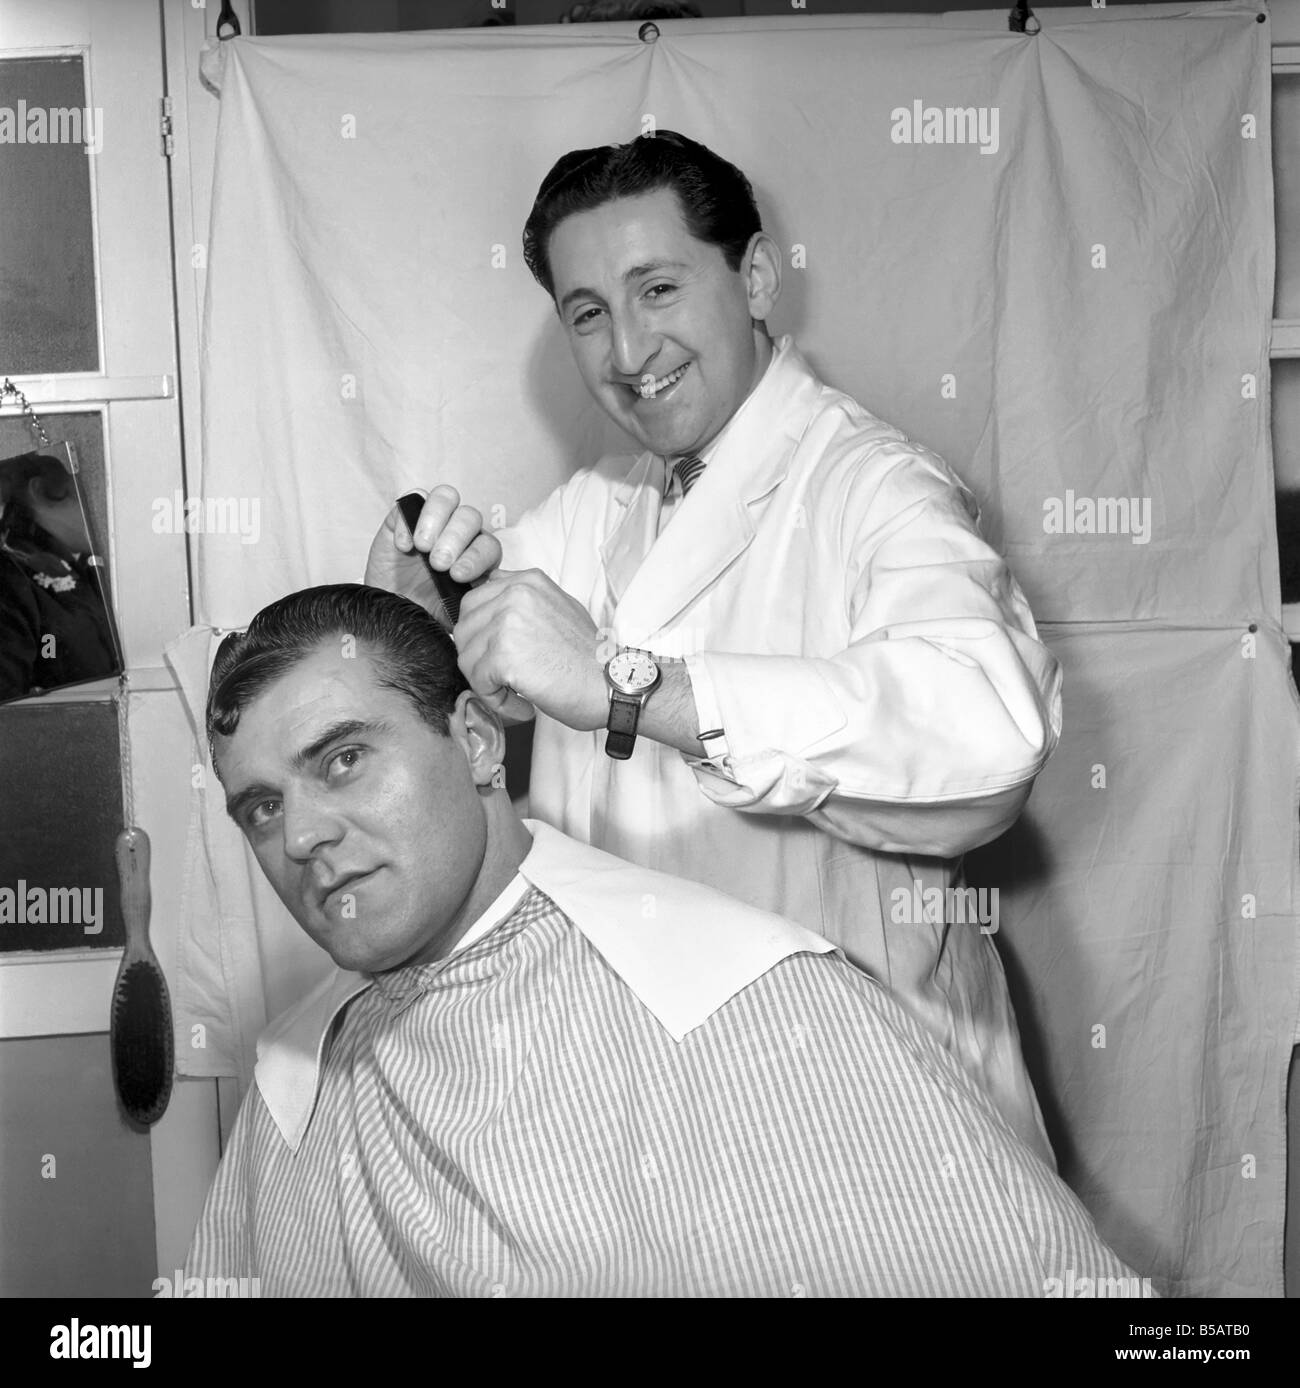 Men's Fashions: The Bill Haily hair cut. February 1959 A352-003 Stock Photo